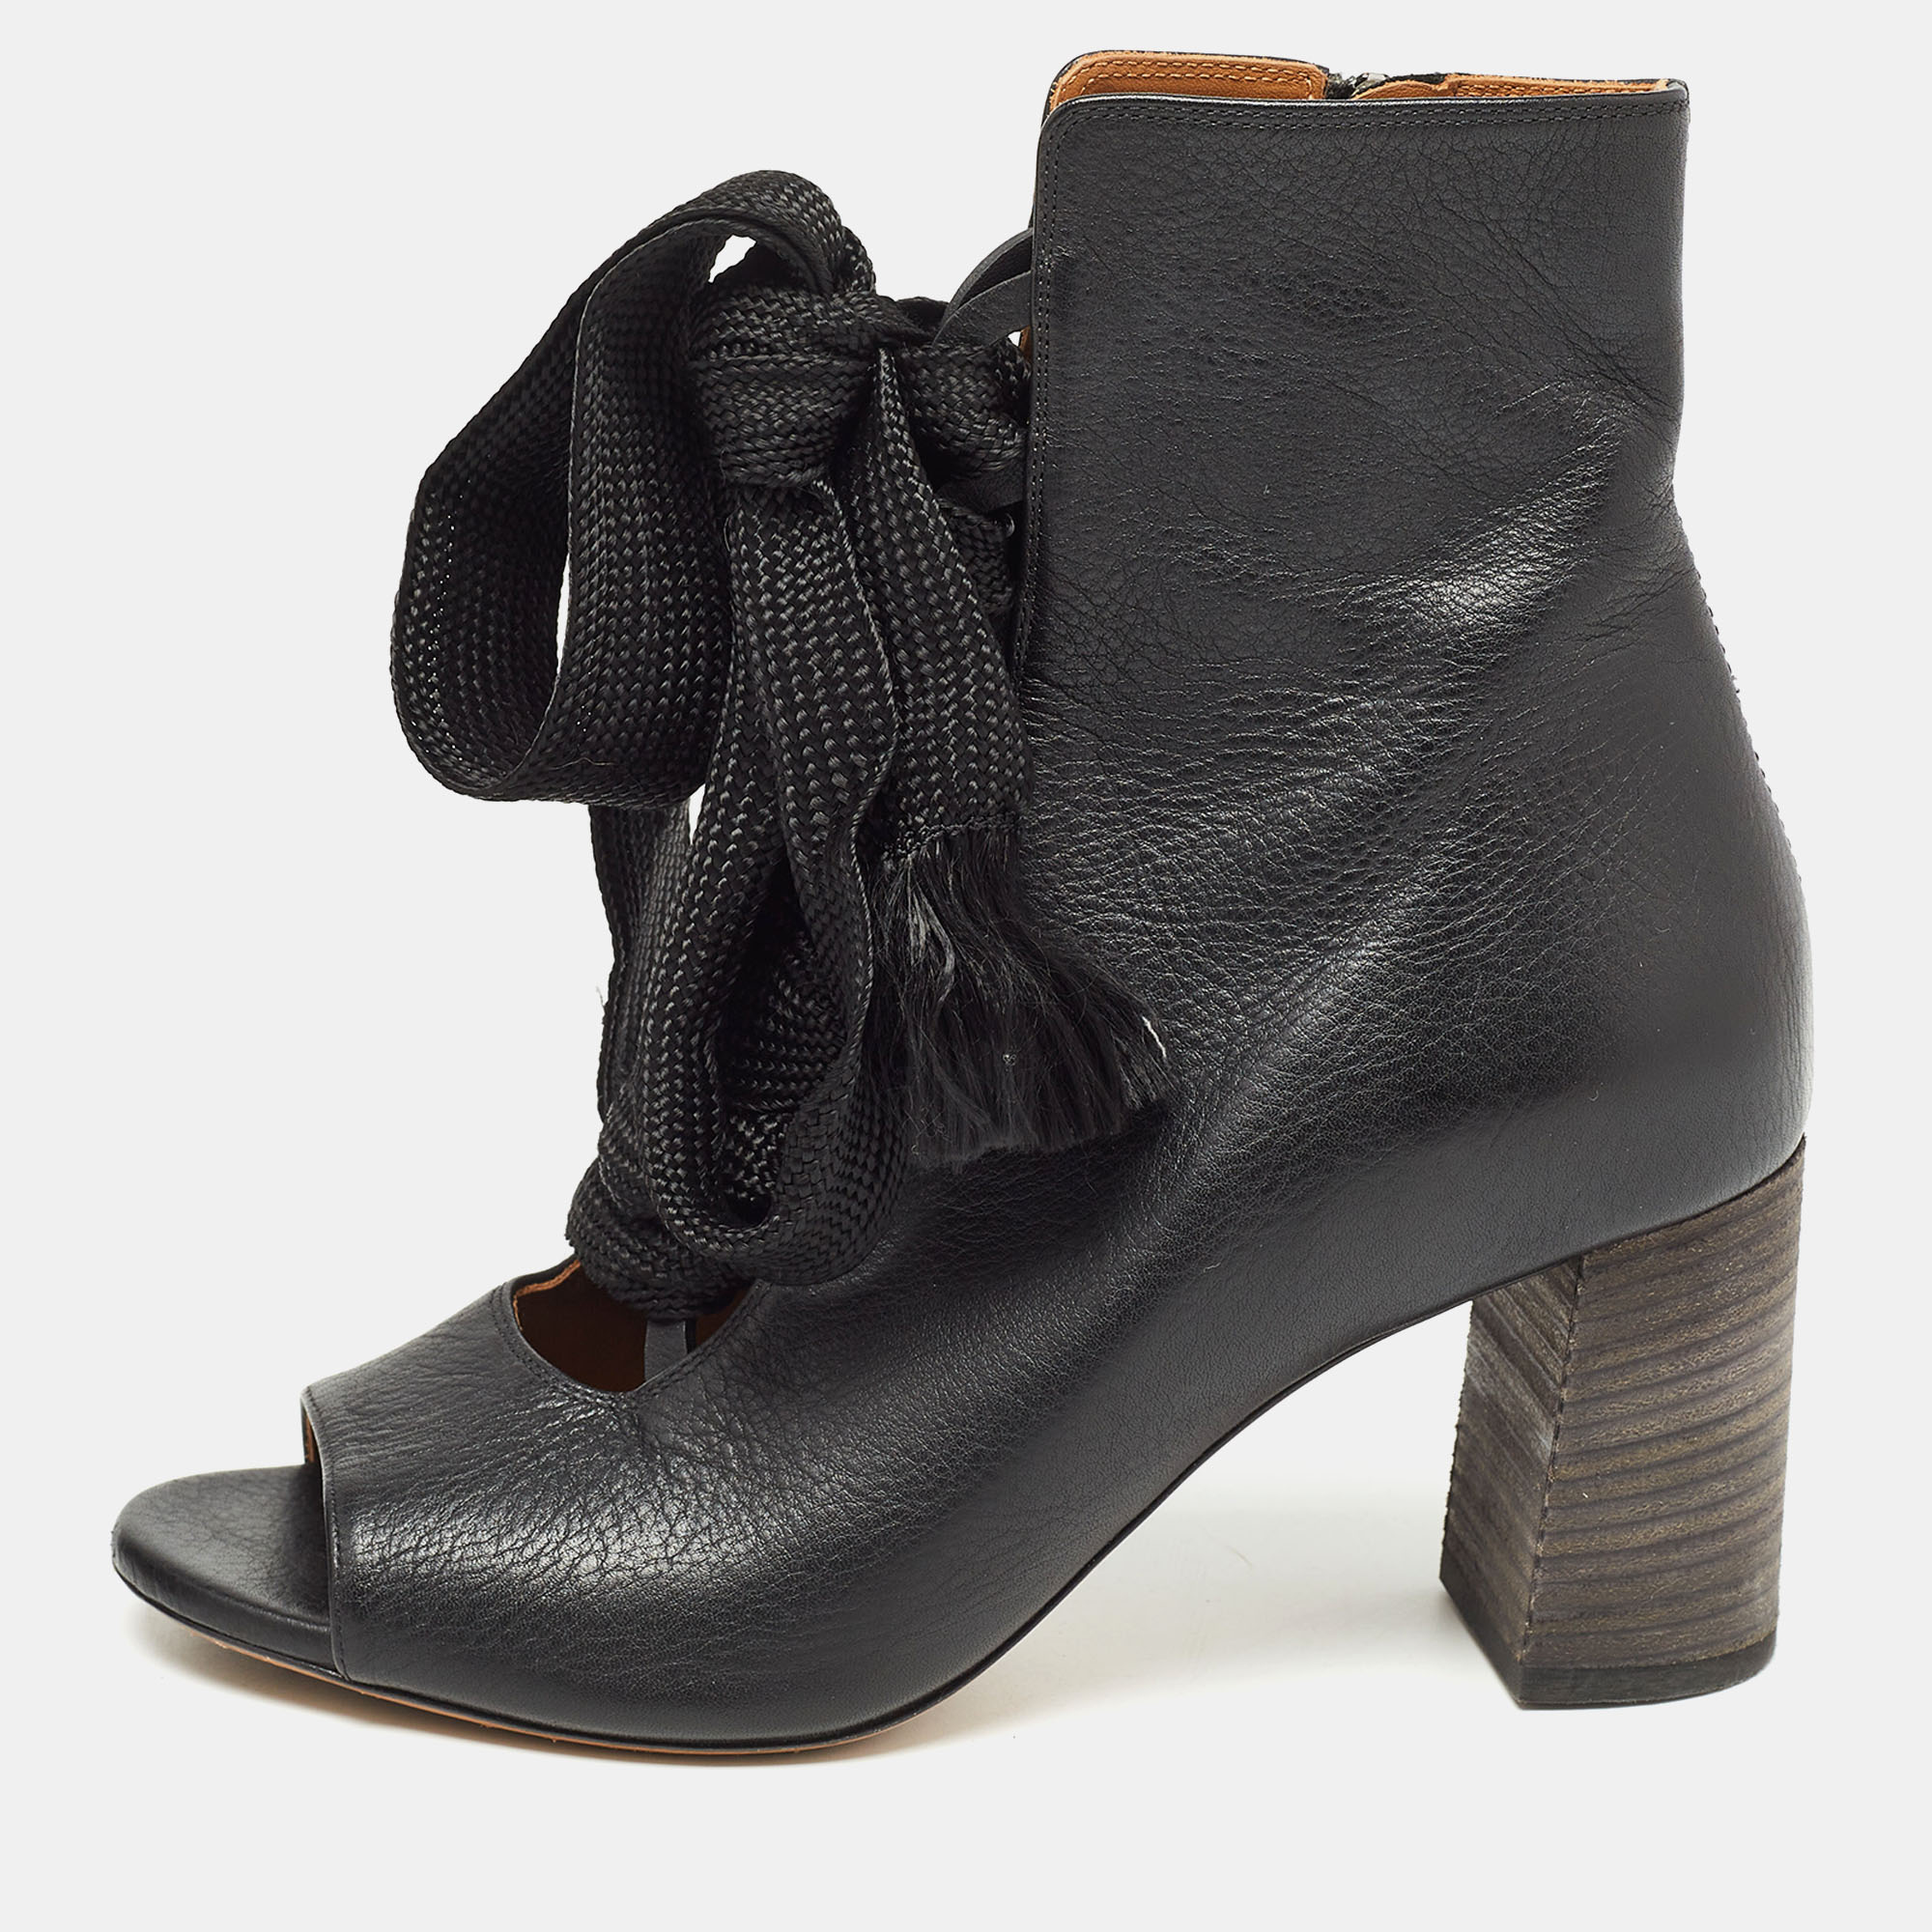 Chloe black leather harper peep toe ankle wrap booties size 37.5